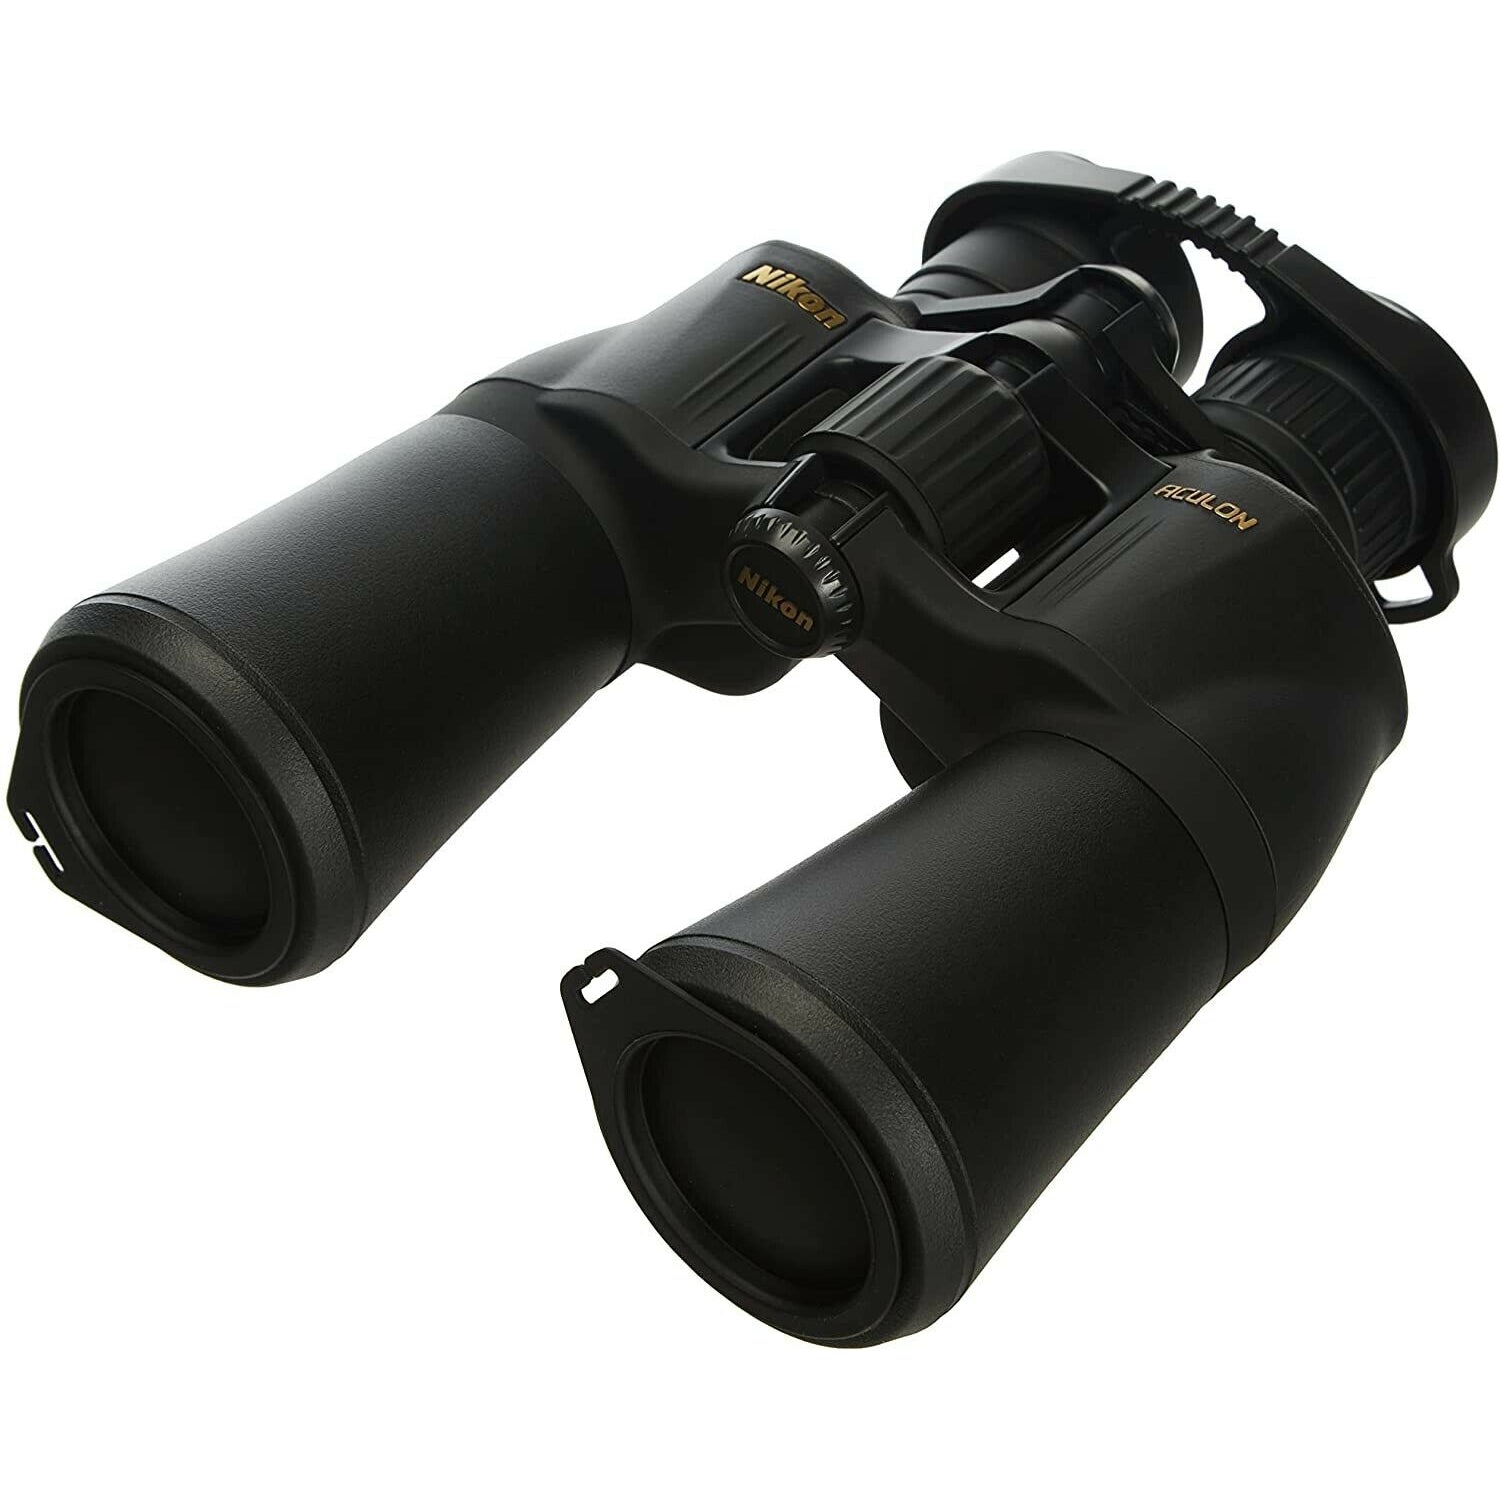 NIKON Aculon A211 Zoom Model 10-22 x 50 mm Porro Prism Binoculars